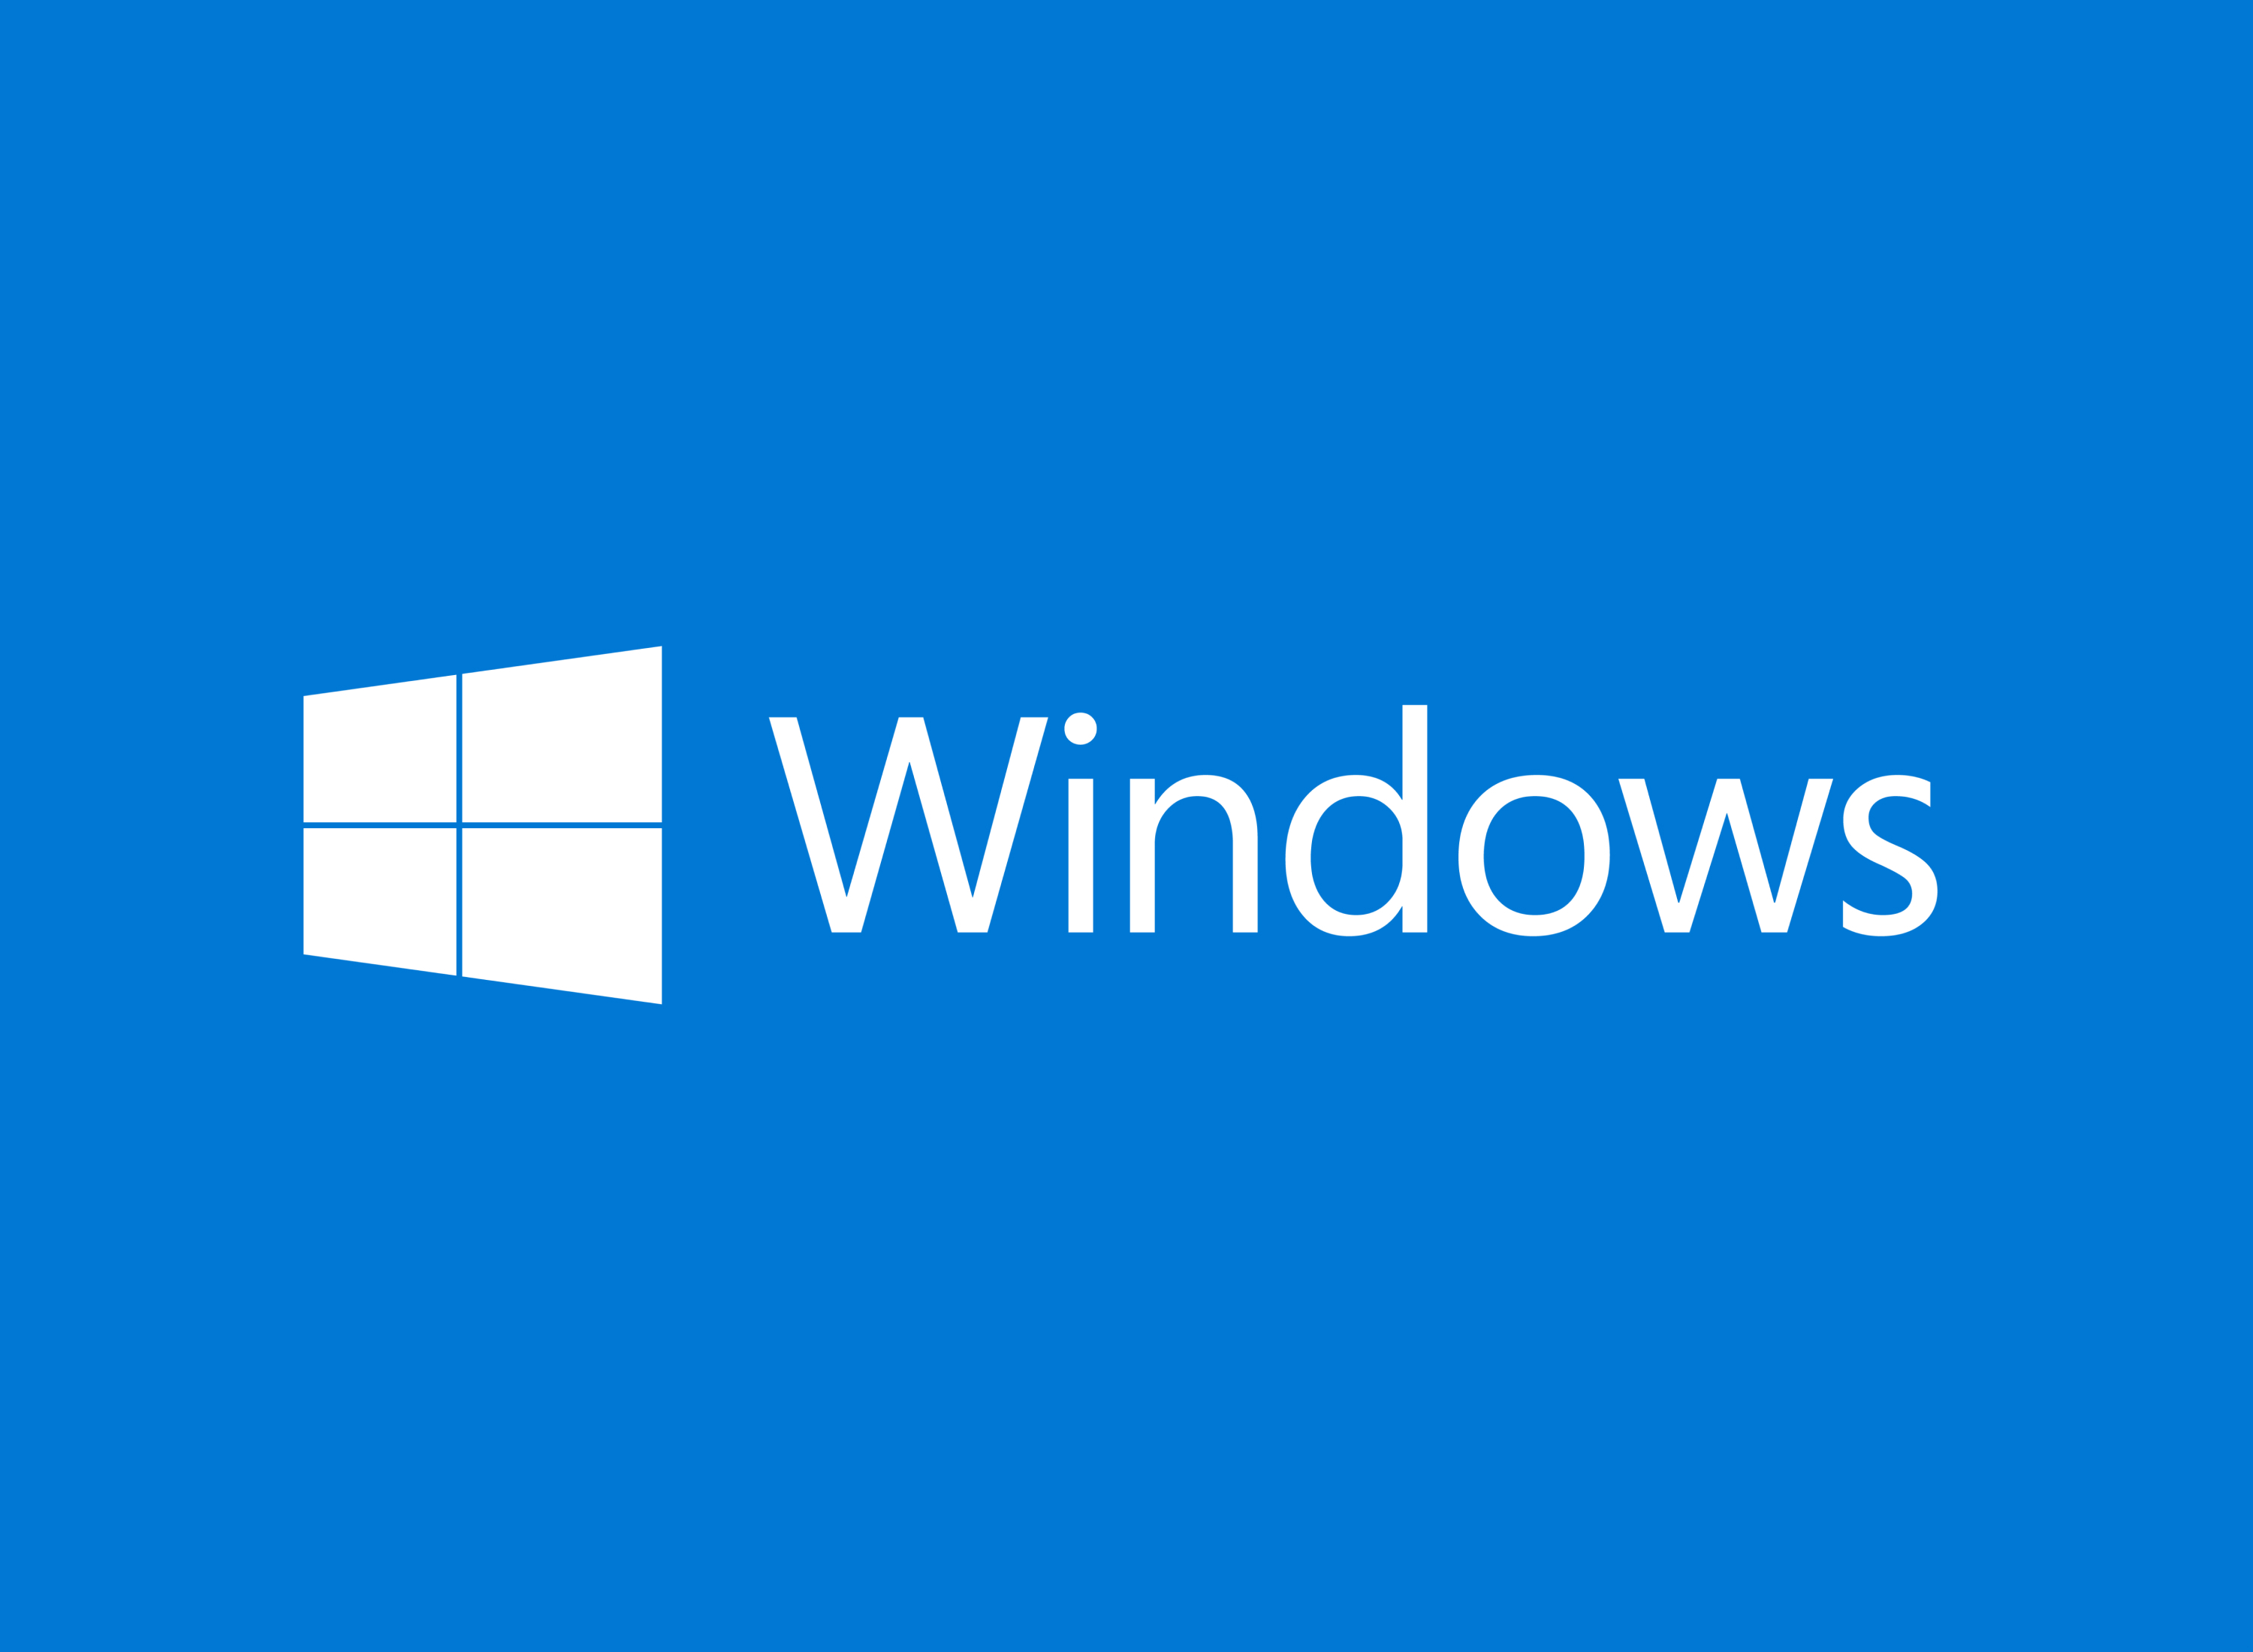 Update on Windows 11 minimum system requirements